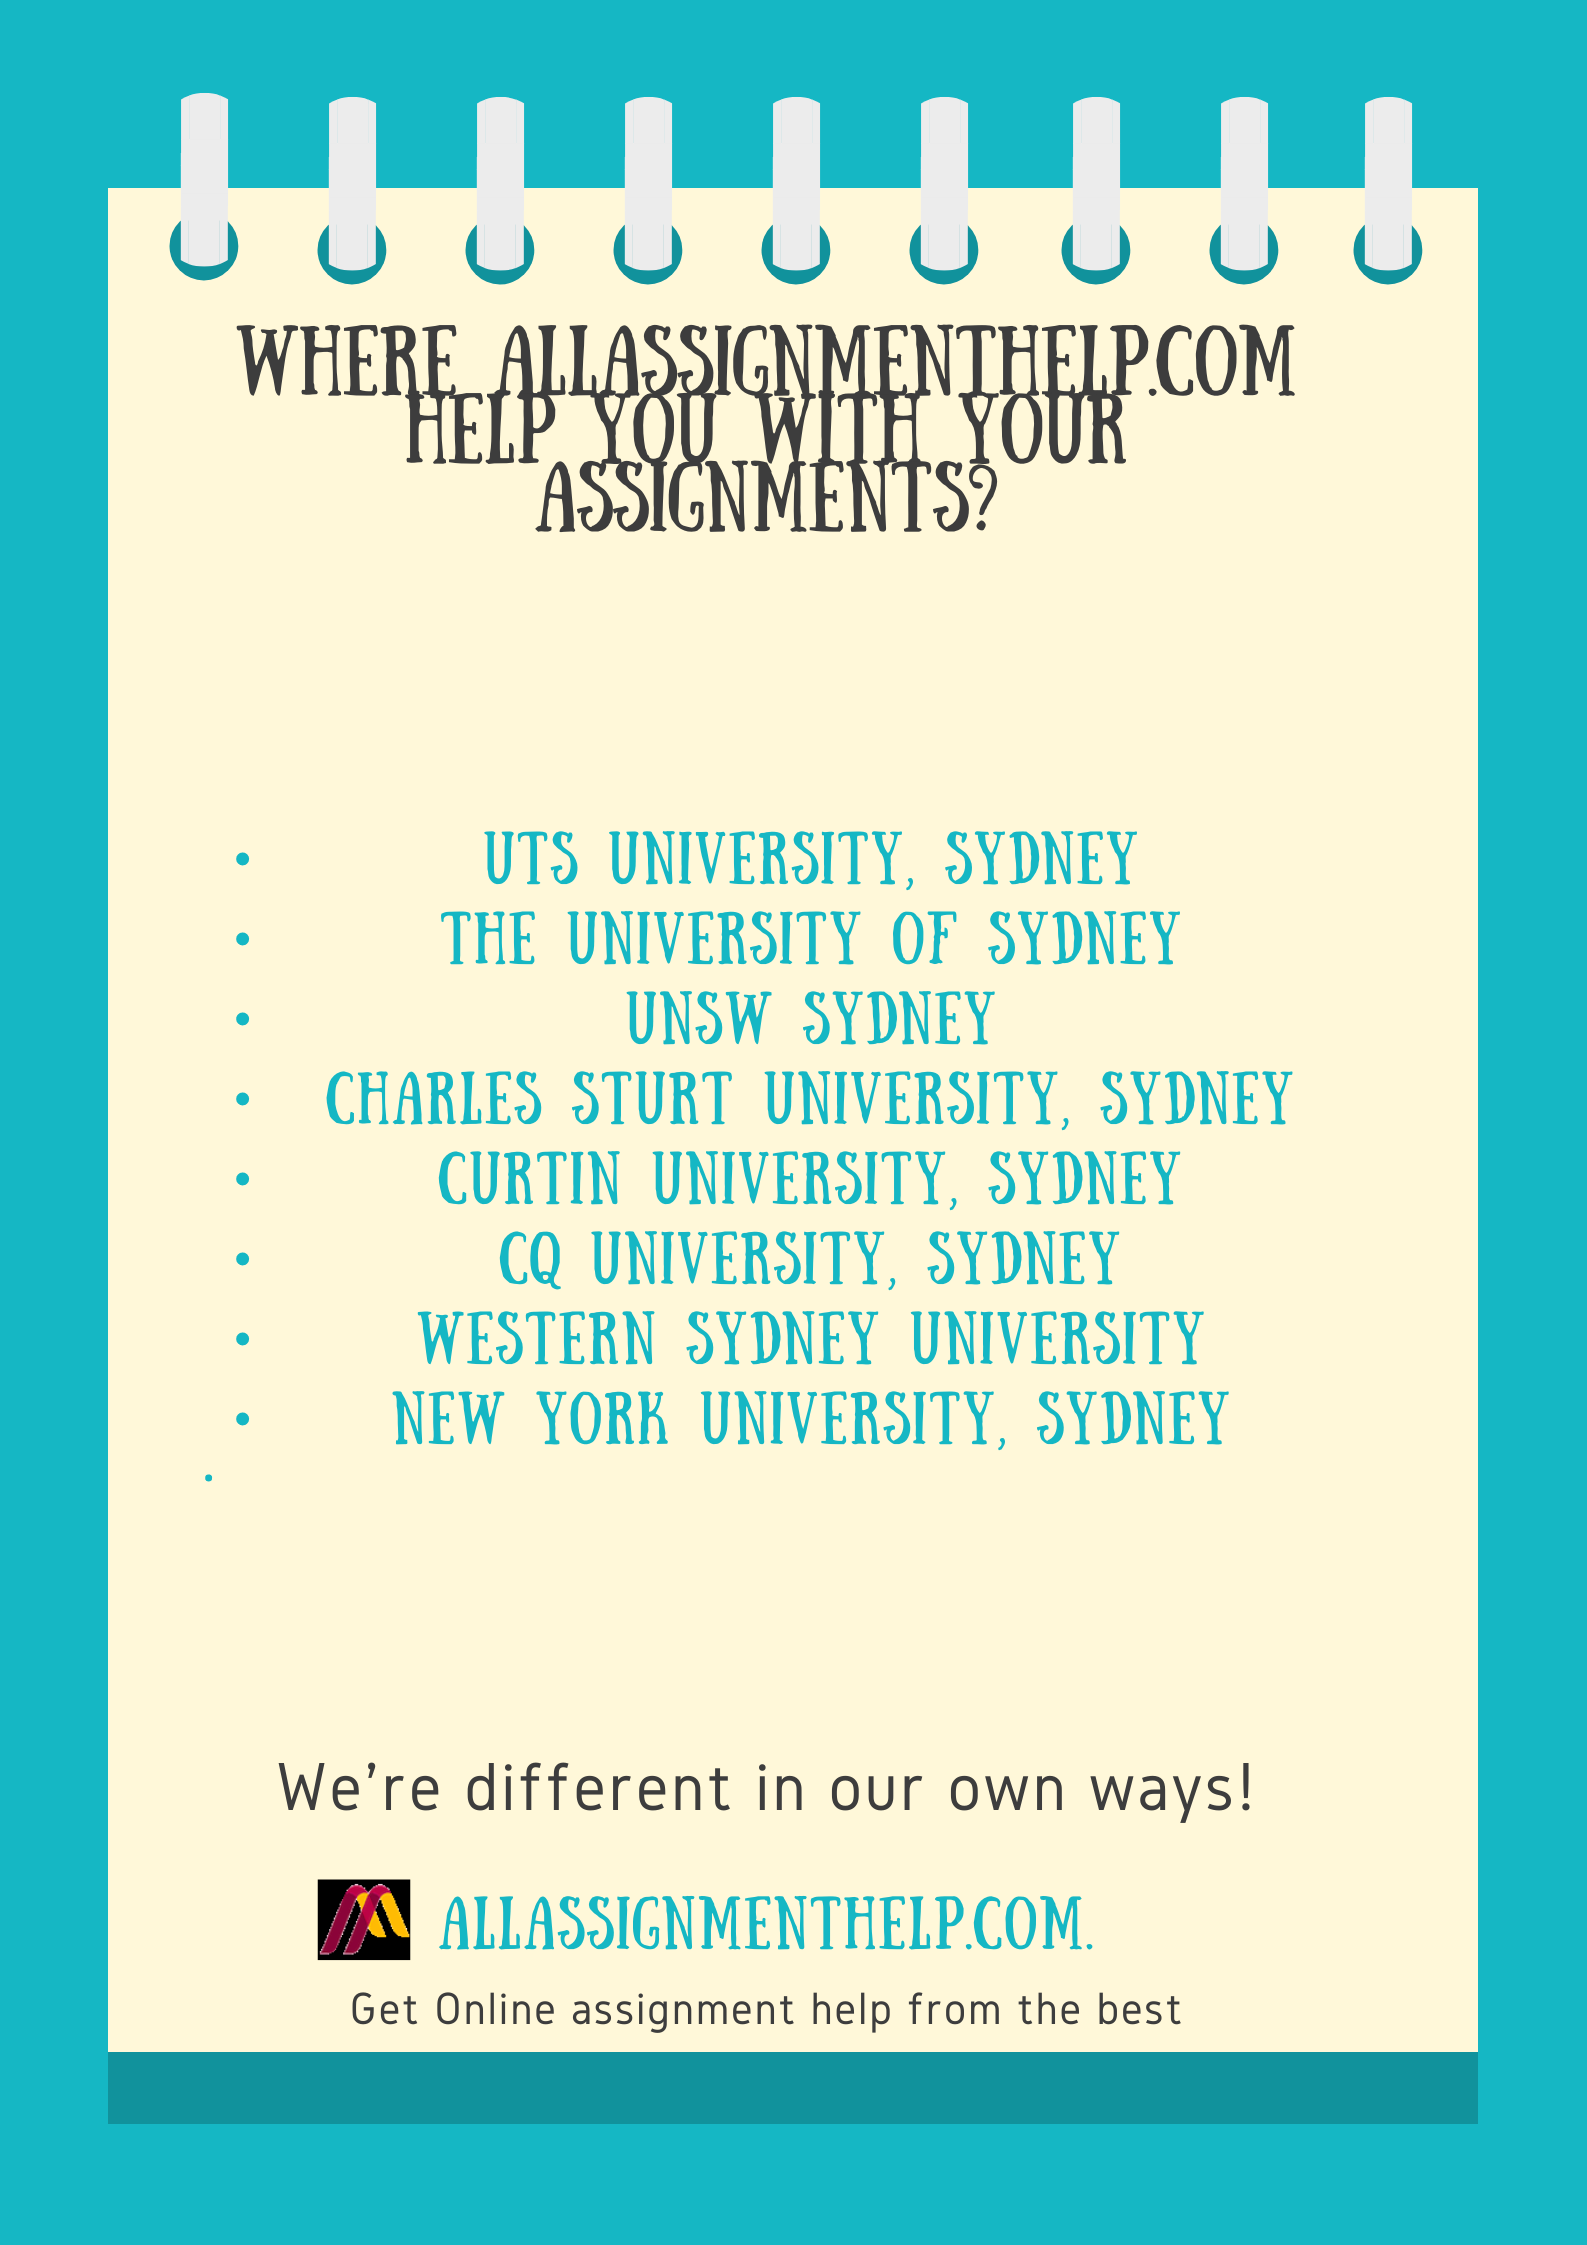 macquarie university assignment help